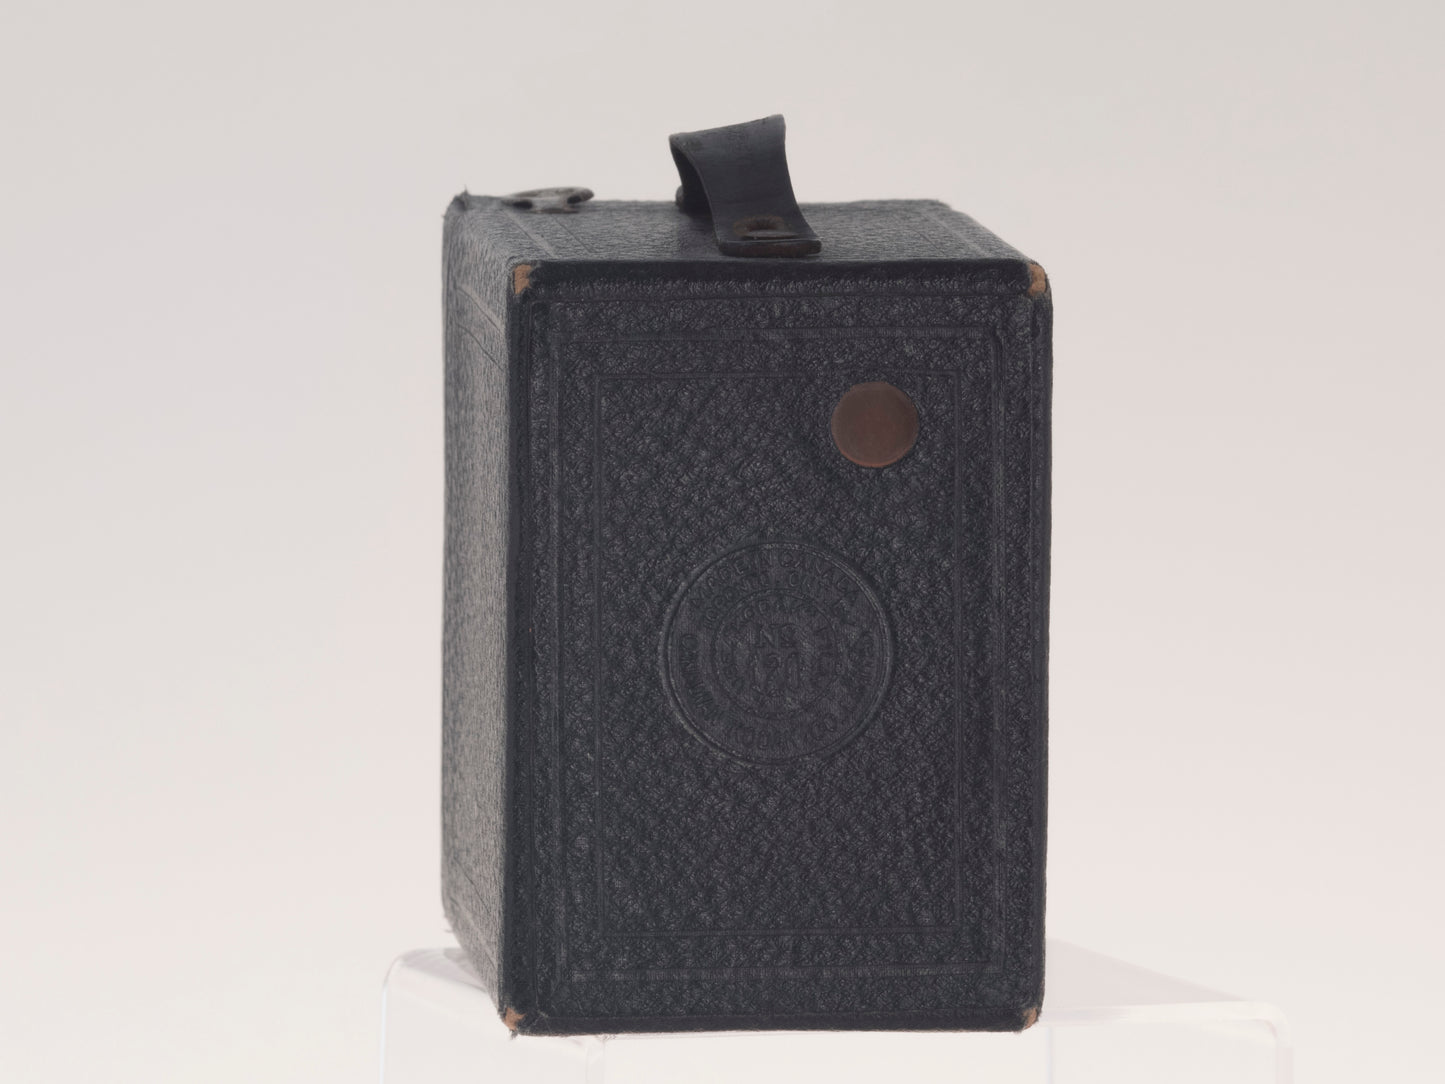 Appareil photo Kodak Brownie # 2 Hawkeye 120 modèle C (utilise un film 120)